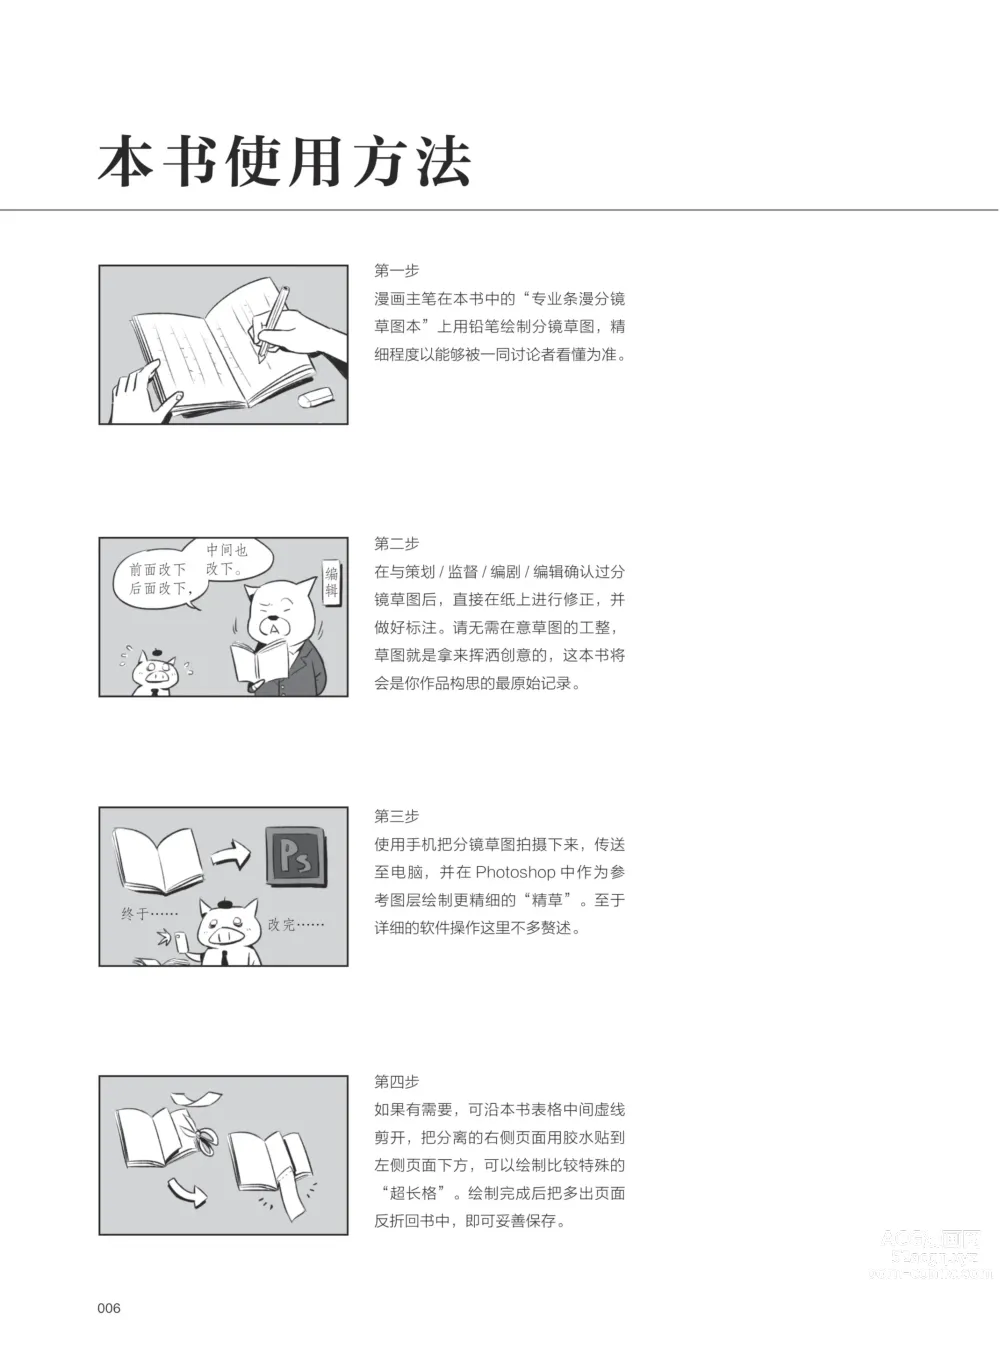 Page 7 of manga 条漫分镜草图本